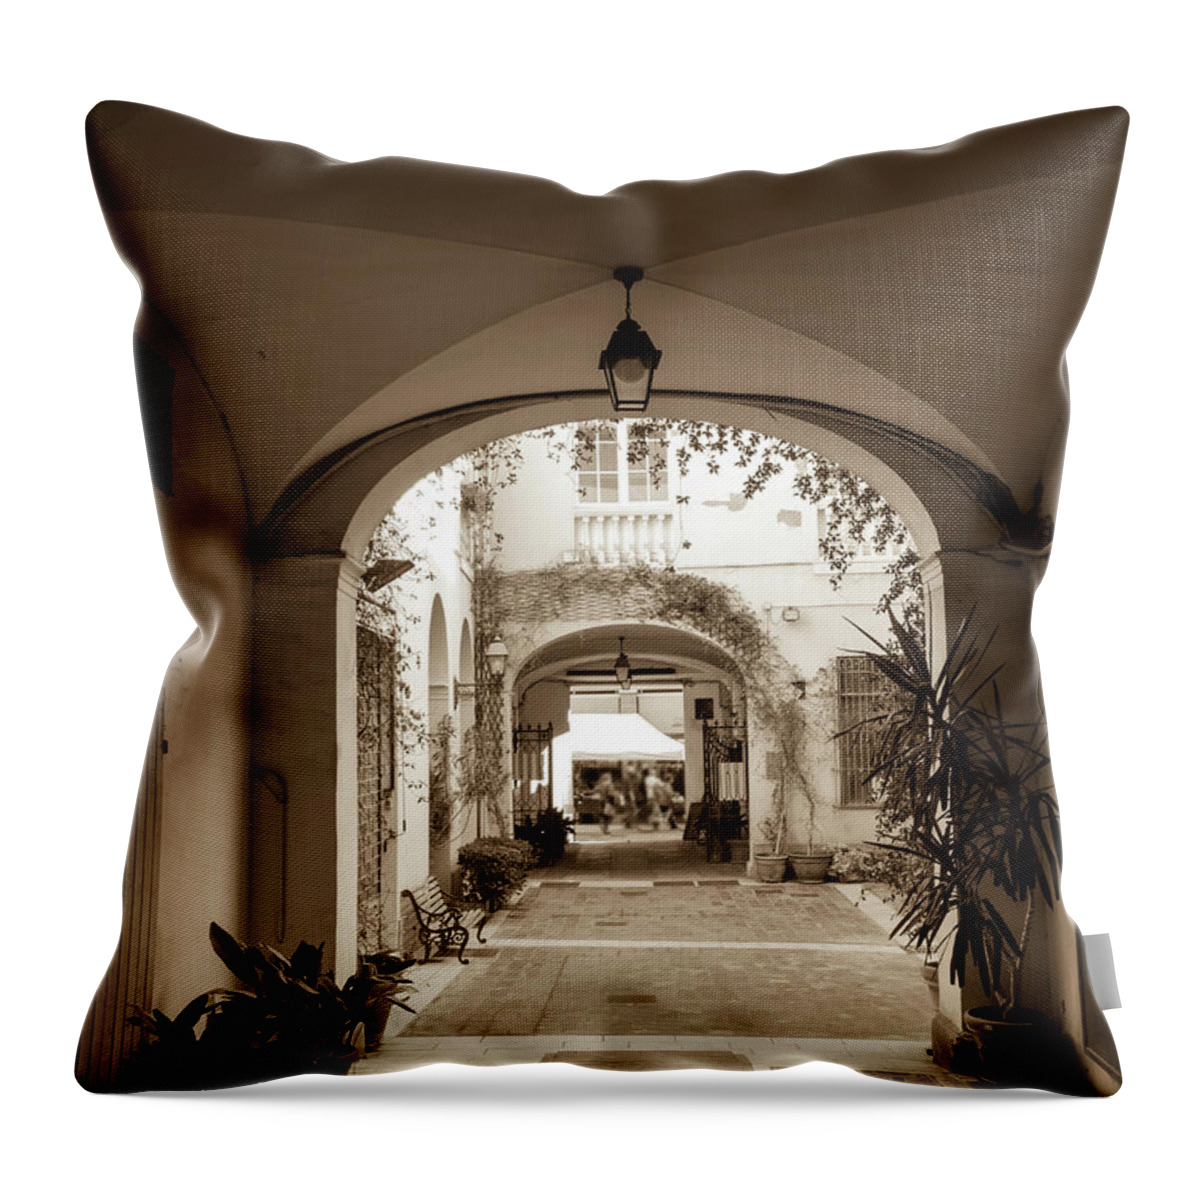 Italian Courtyard Throw Pillow featuring the photograph Italian Courtyard by Marina Usmanskaya